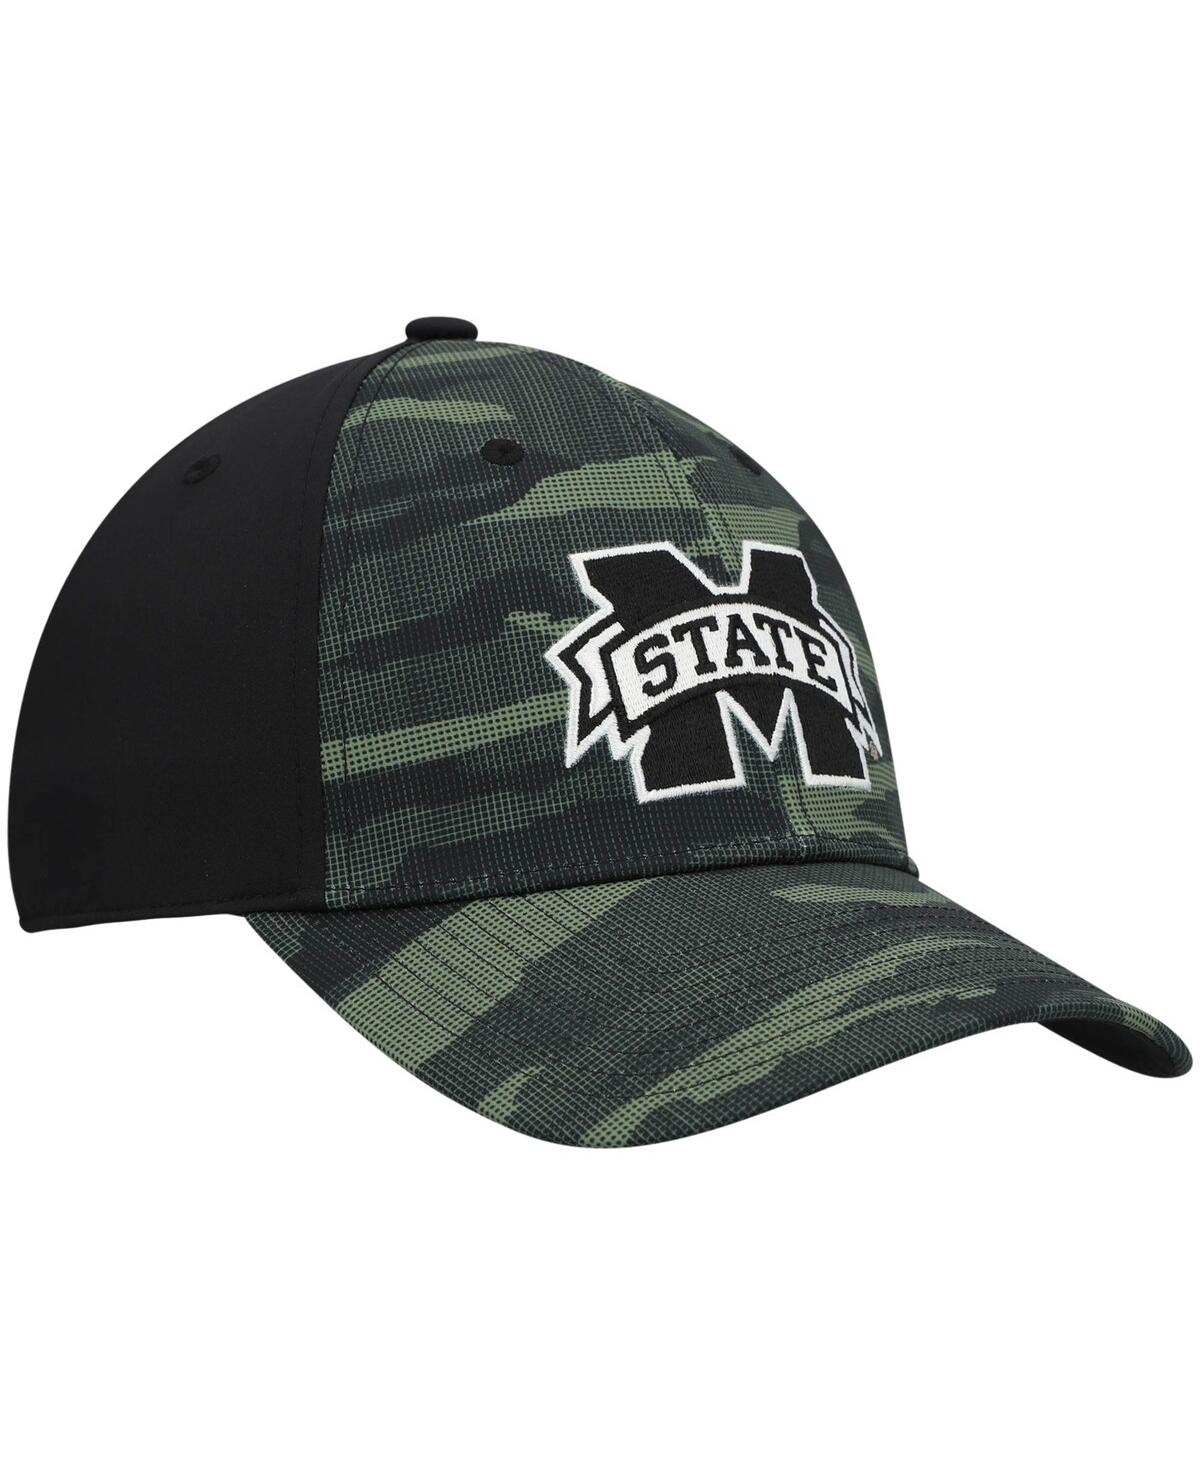 Shop Adidas Originals Men's Adidas Camo Mississippi State Bulldogs Military-inspired Appreciation Flex Hat